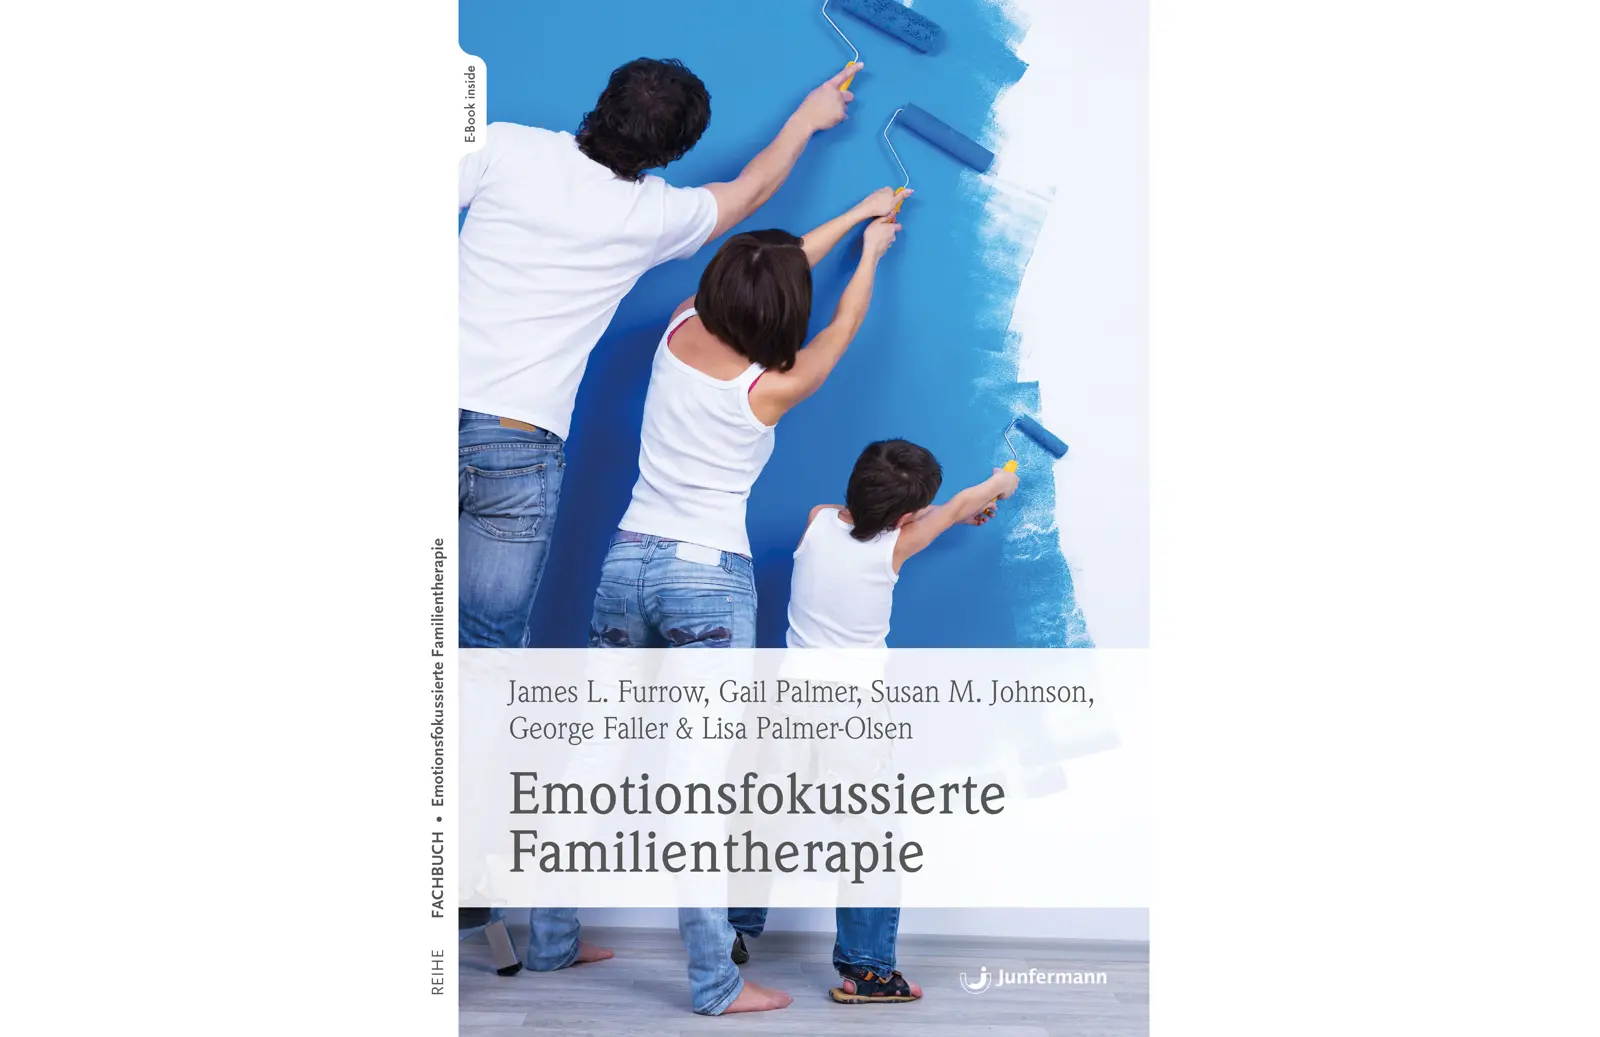 Featured image for “Emotionsfokussierte Familientherapie”